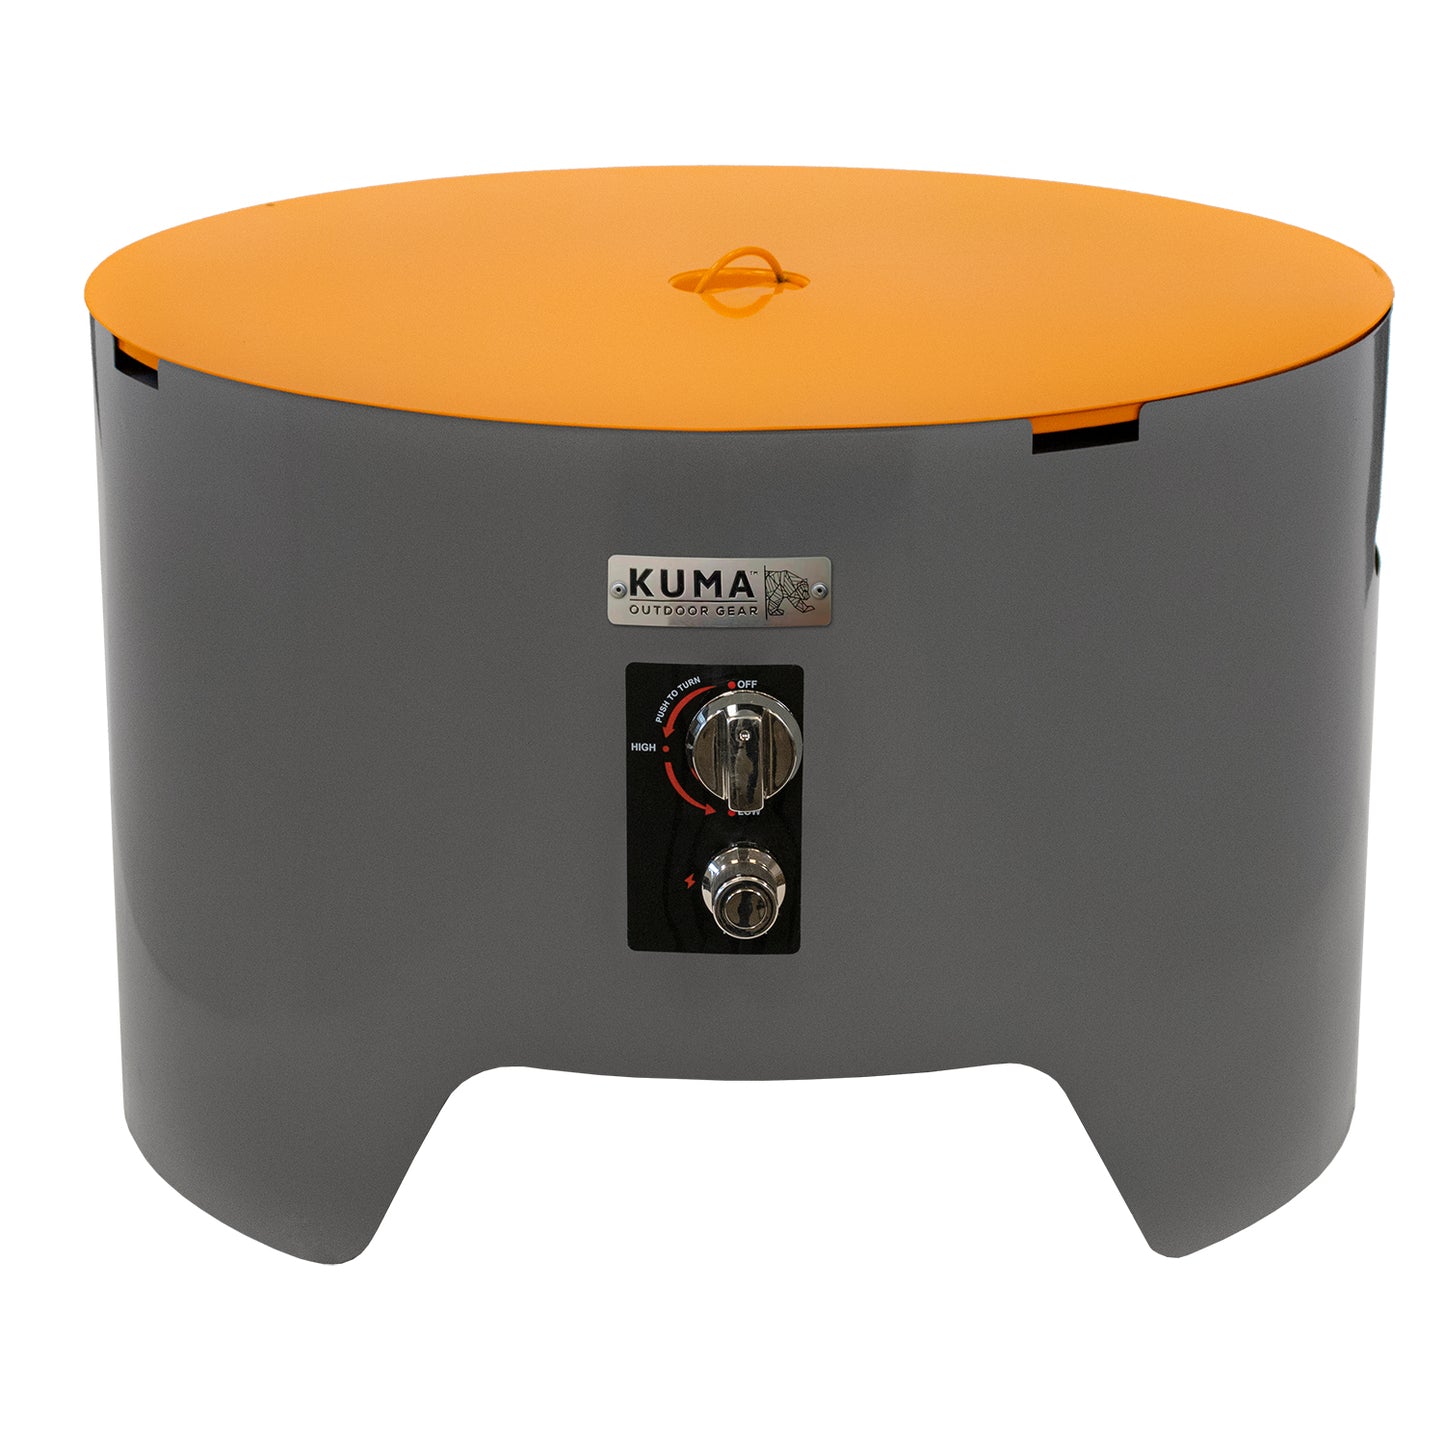 New! Kuma Cylinder Firepit - Graphite/Orange